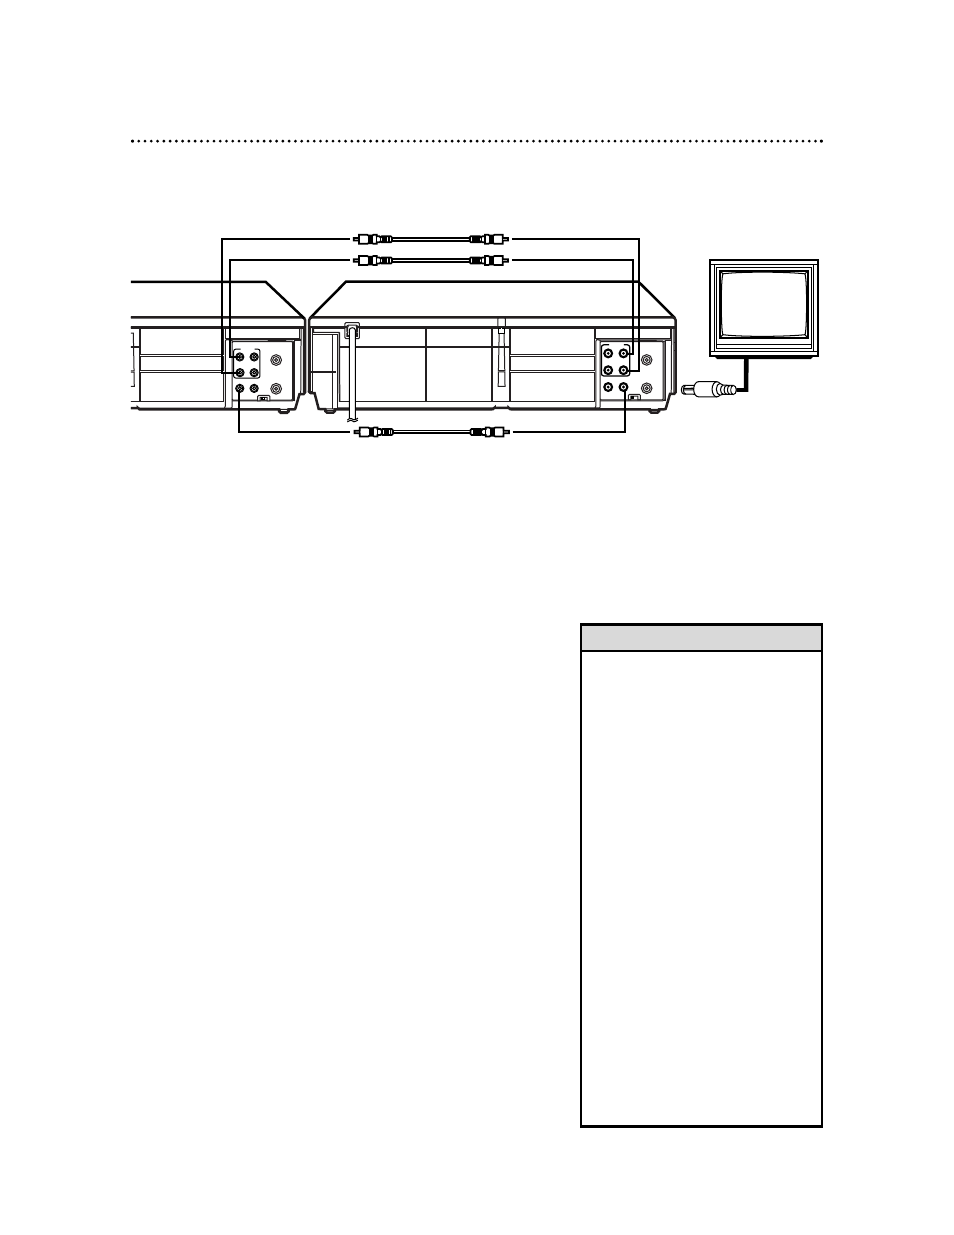 32 rerecording (tape duplication) | Philips Magnavox VR401BMX User Manual | Page 9 / 9